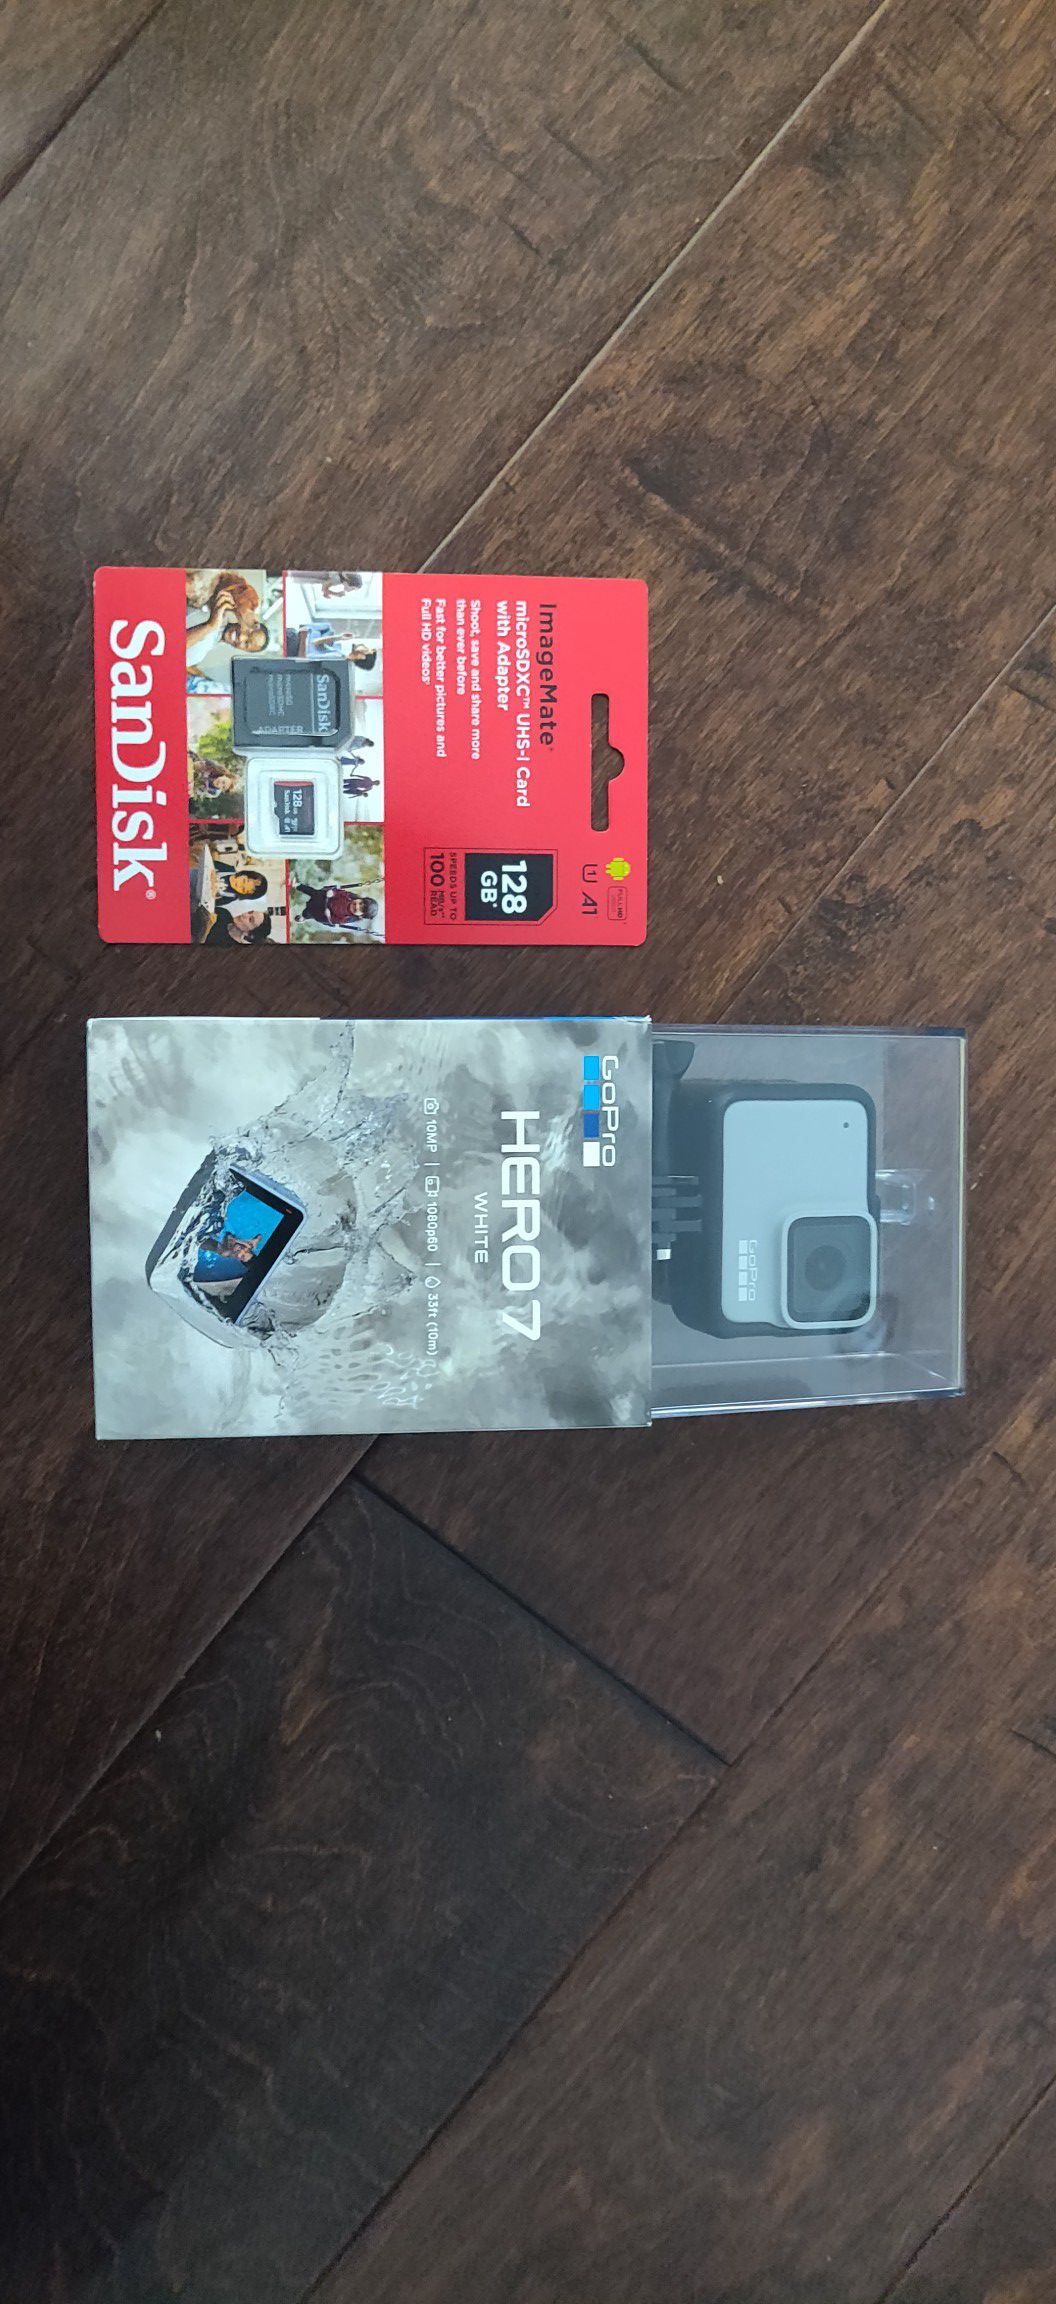 GoPro Hero 7 + 128 GB SanDisk